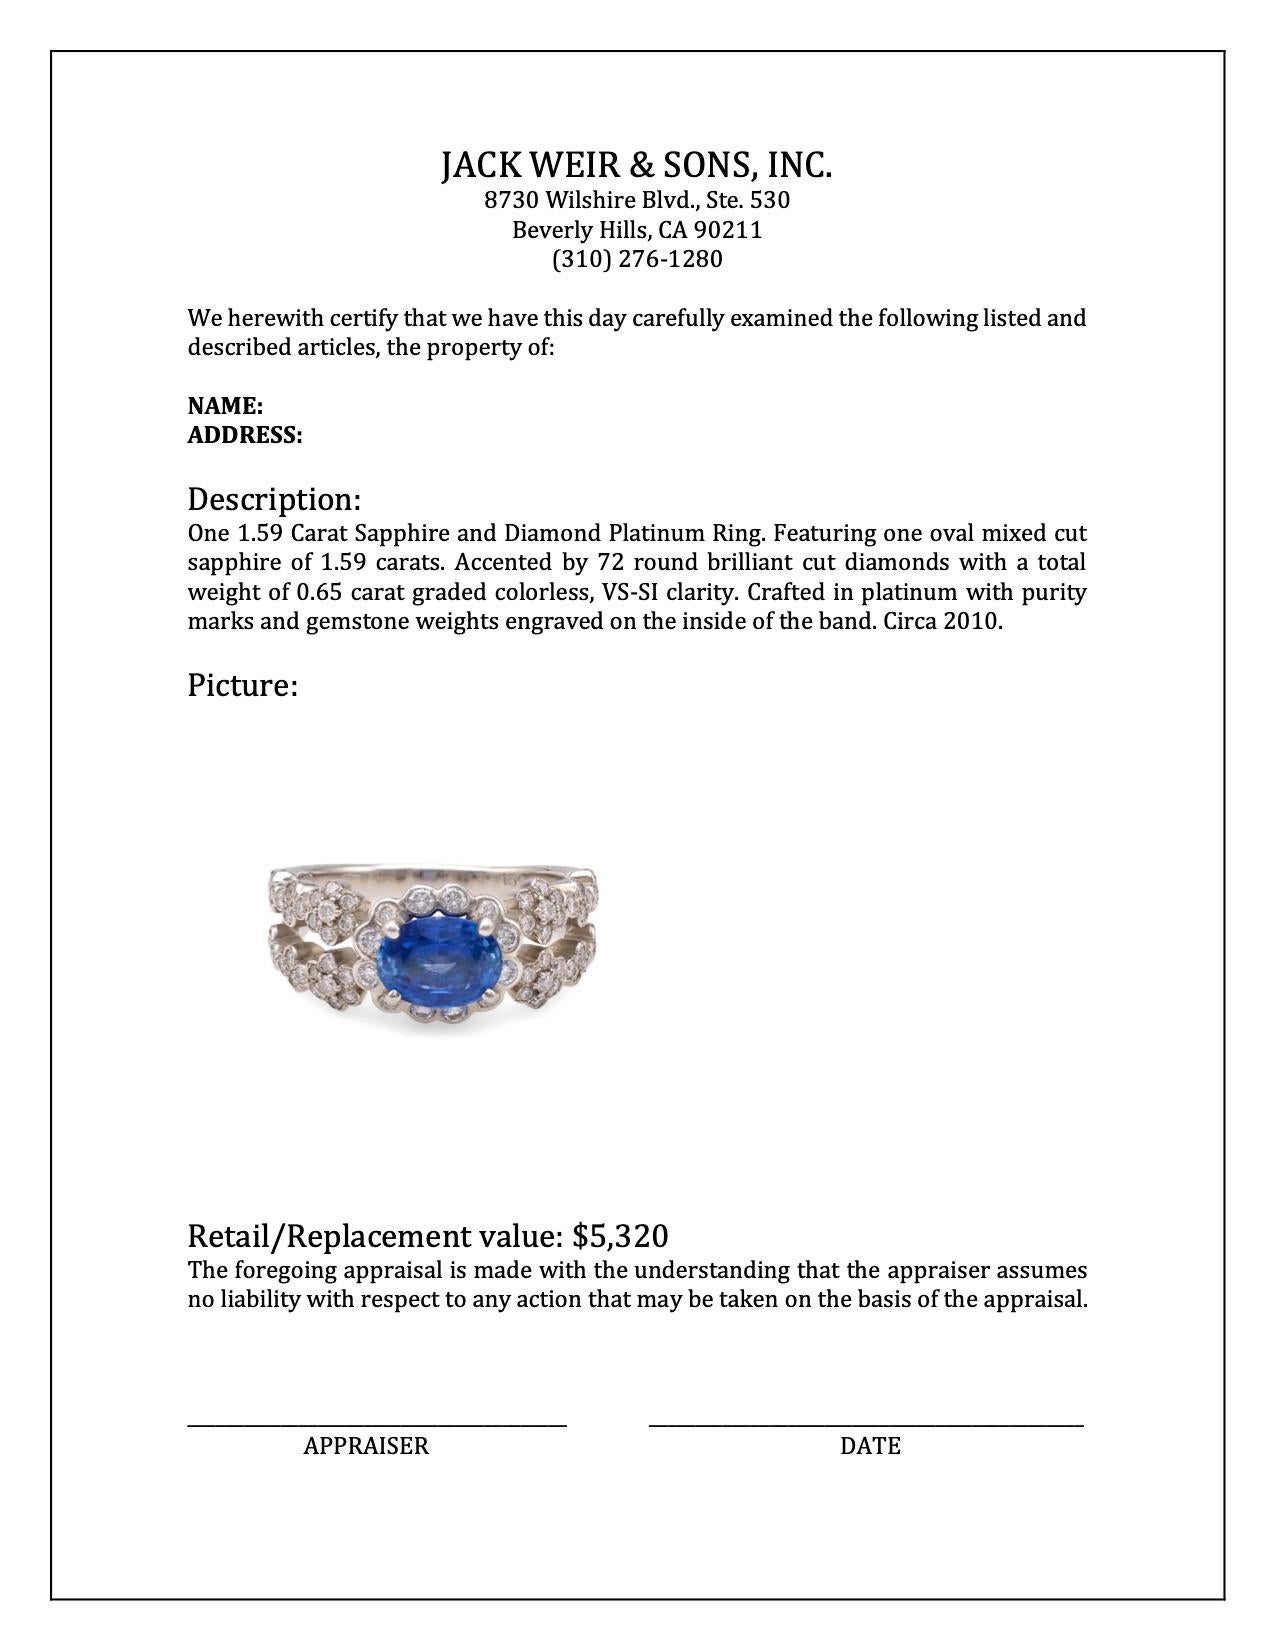 1.59 Carat Sapphire and Diamond Platinum Ring 1